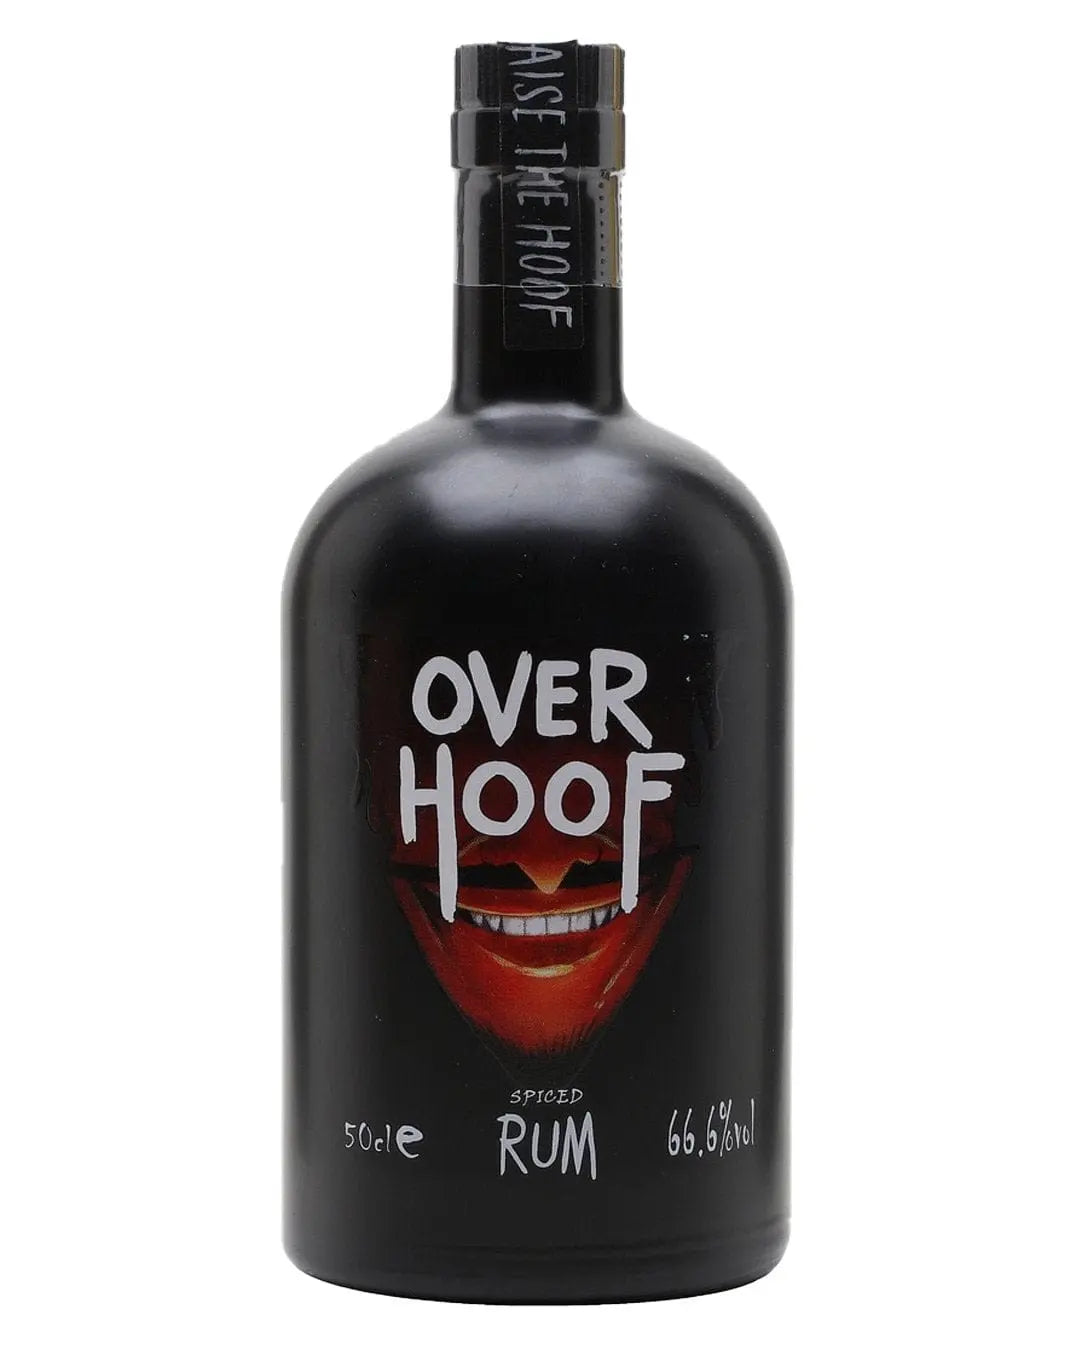 Over Hoof Spiced Rum, 50 cl Rum